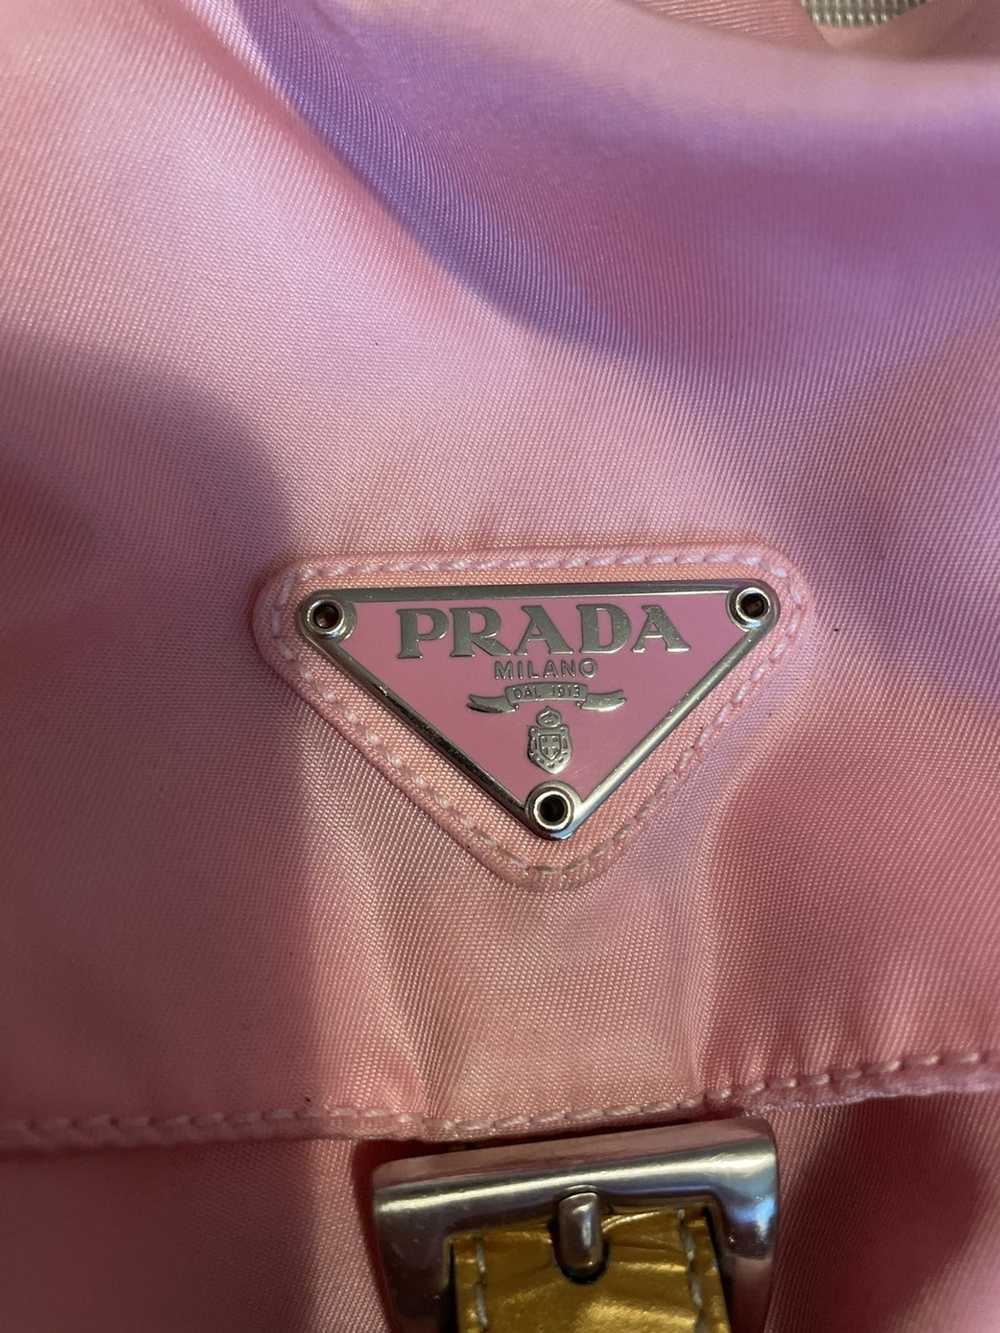 Prada Prada nylon mini backpack - image 2